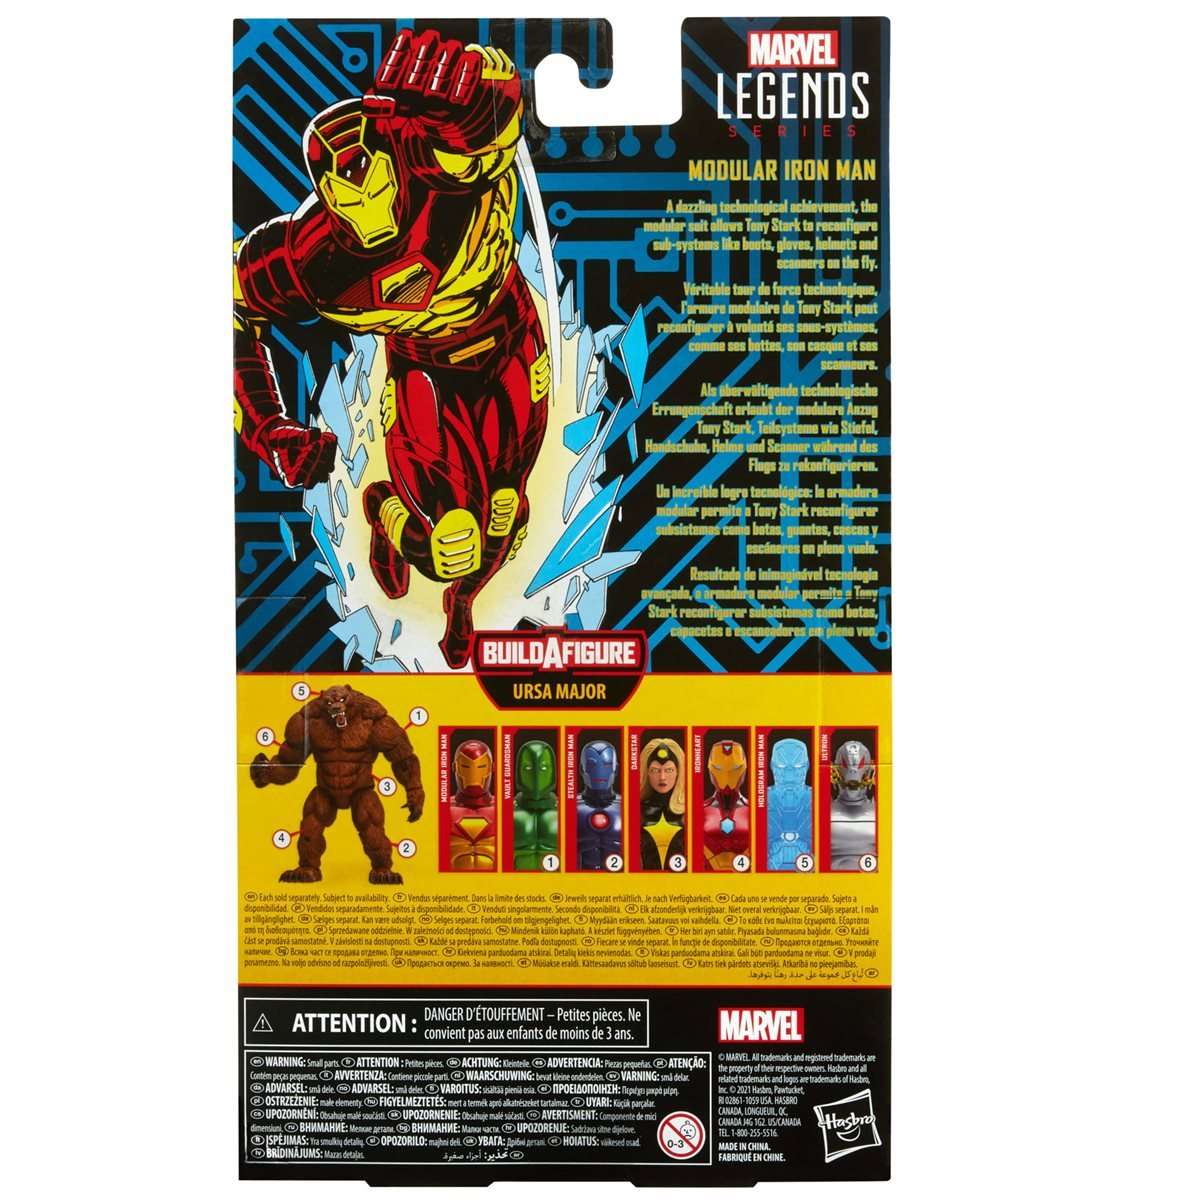 Marvel Legends Ursa Major build a figure wave Comic Modular Iron Man 6-inch figure packaging back